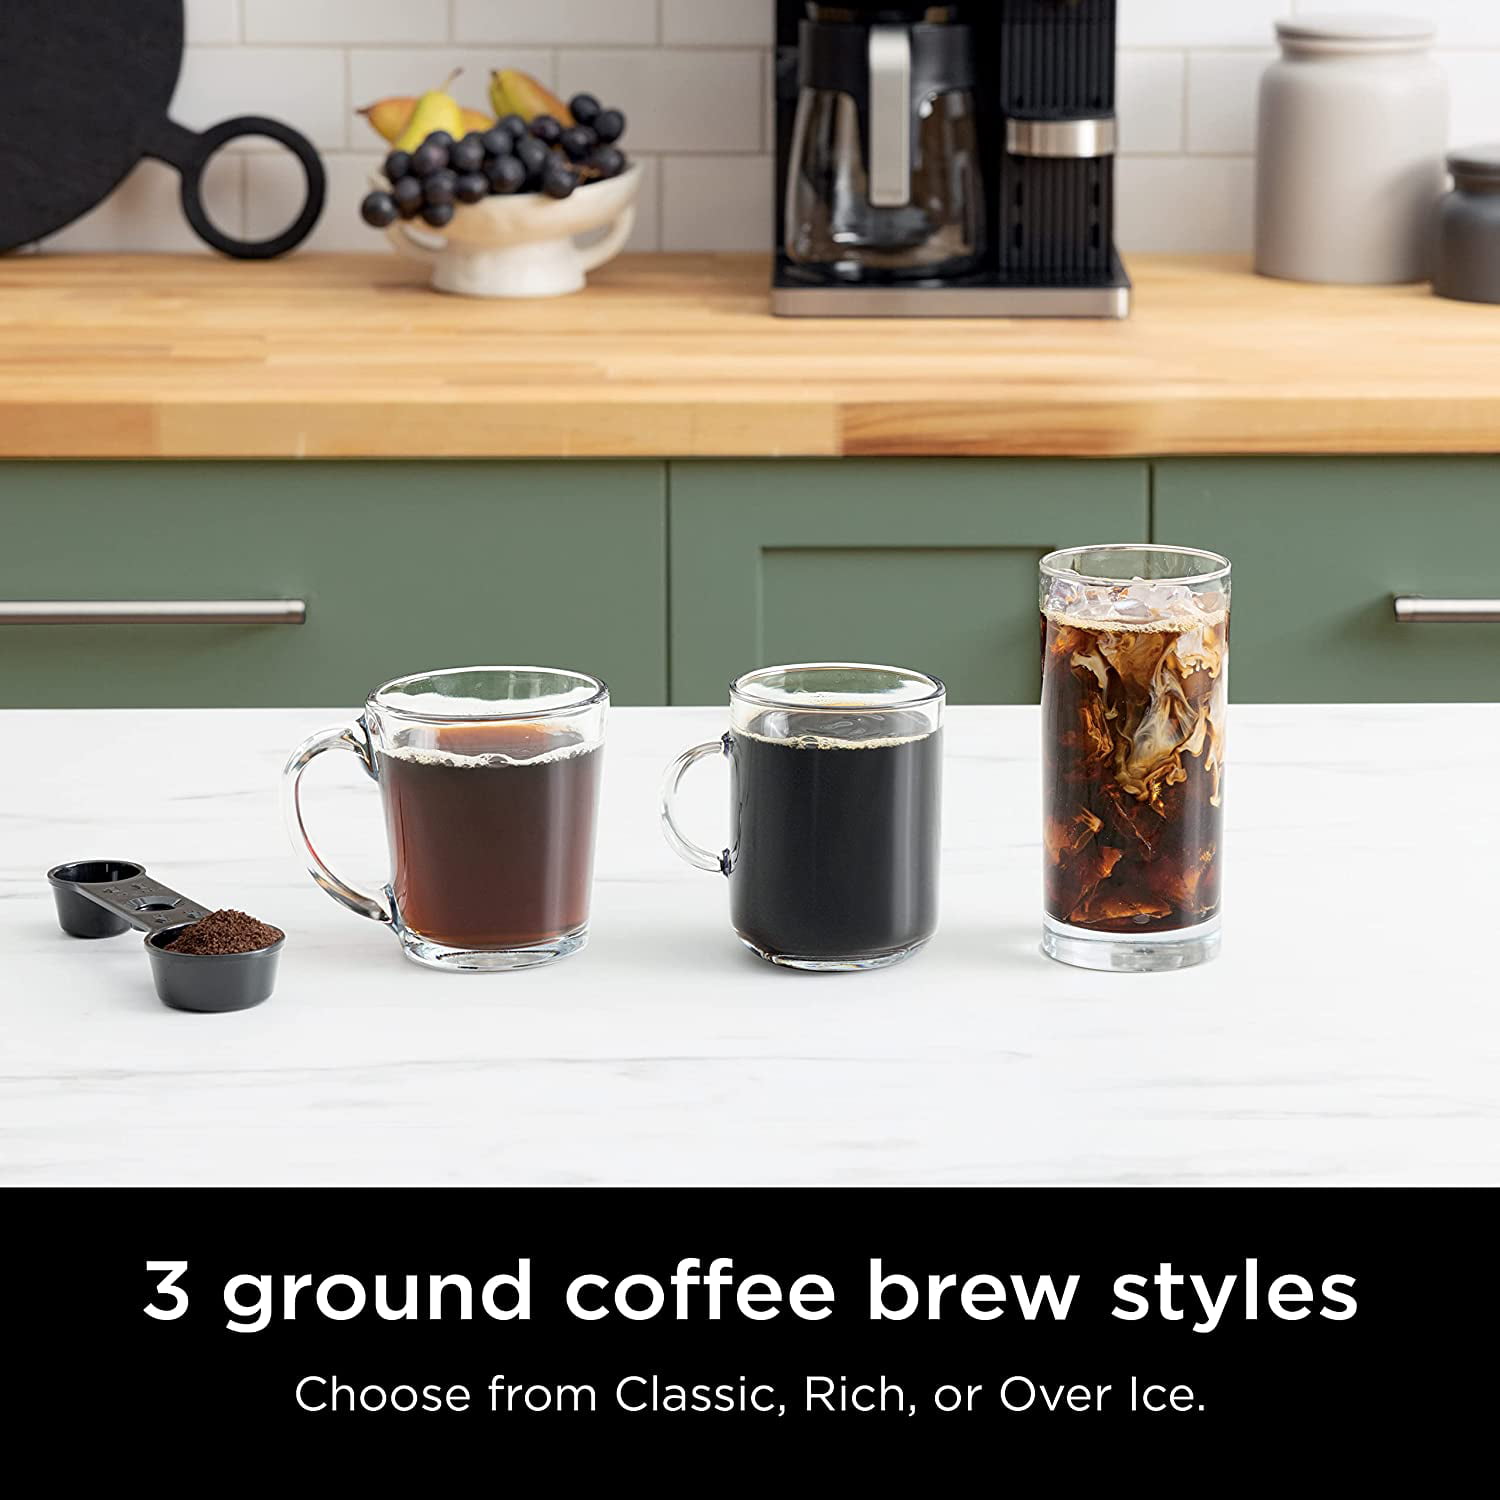 Ninja CFN602 Espresso & Coffee Barista System, Single-Serve Coffee